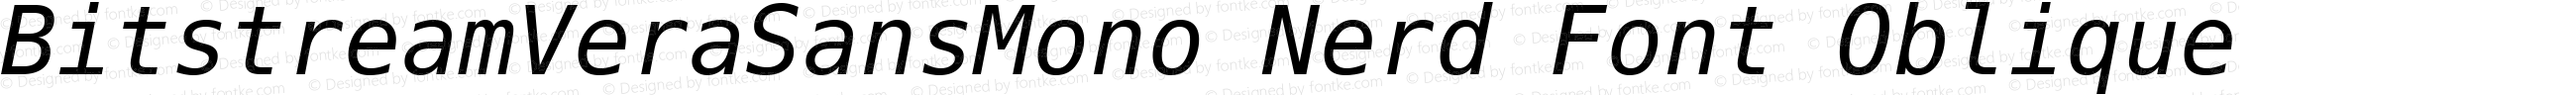 Bitstream Vera Sans Mono Oblique Nerd Font Plus Font Awesome Plus Octicons Mono